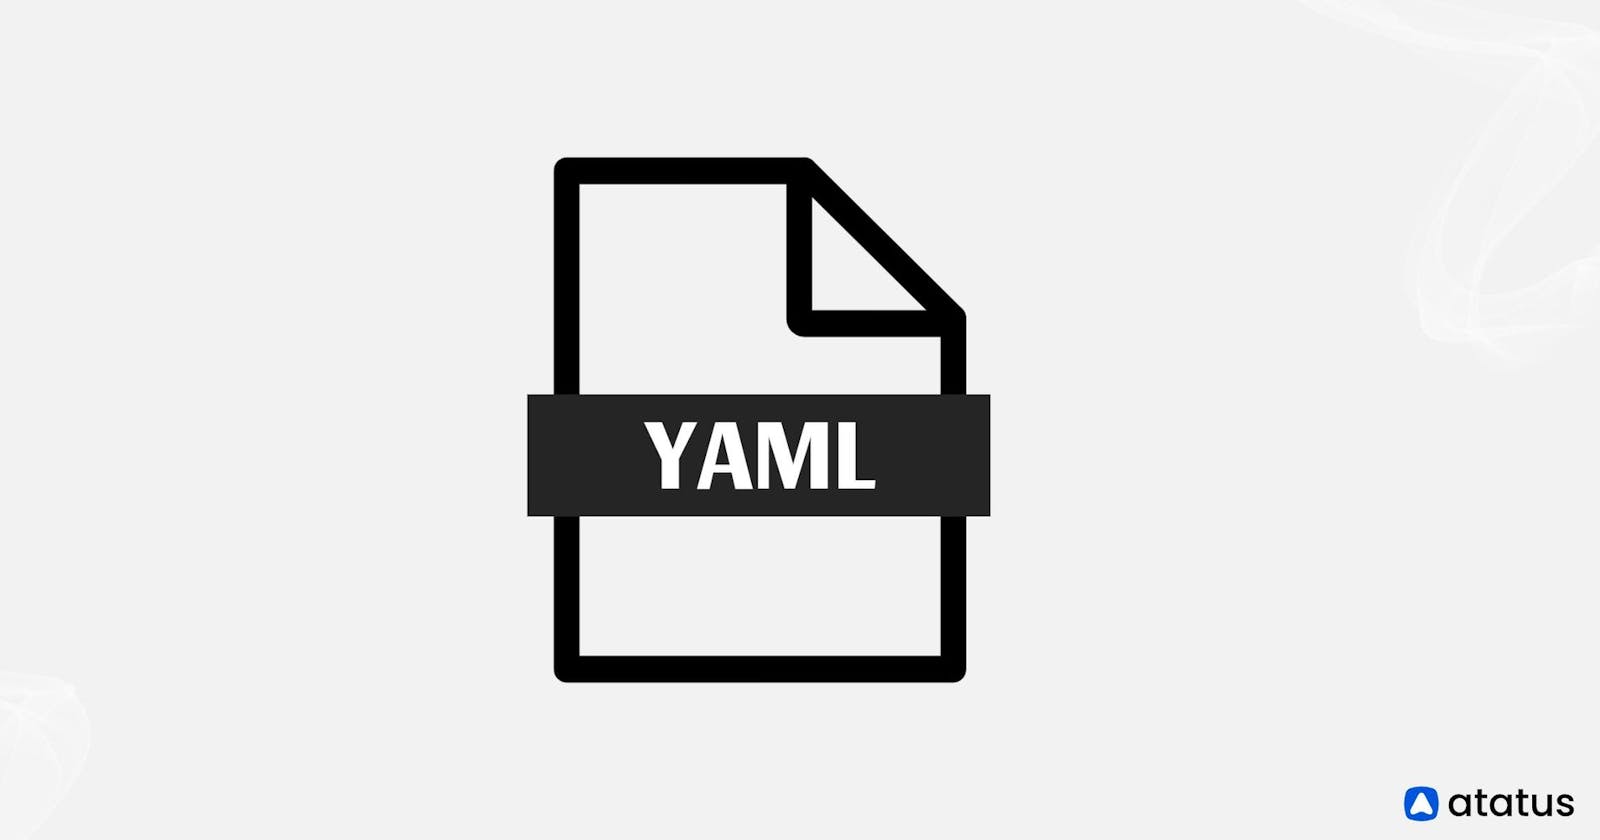 All about YAML